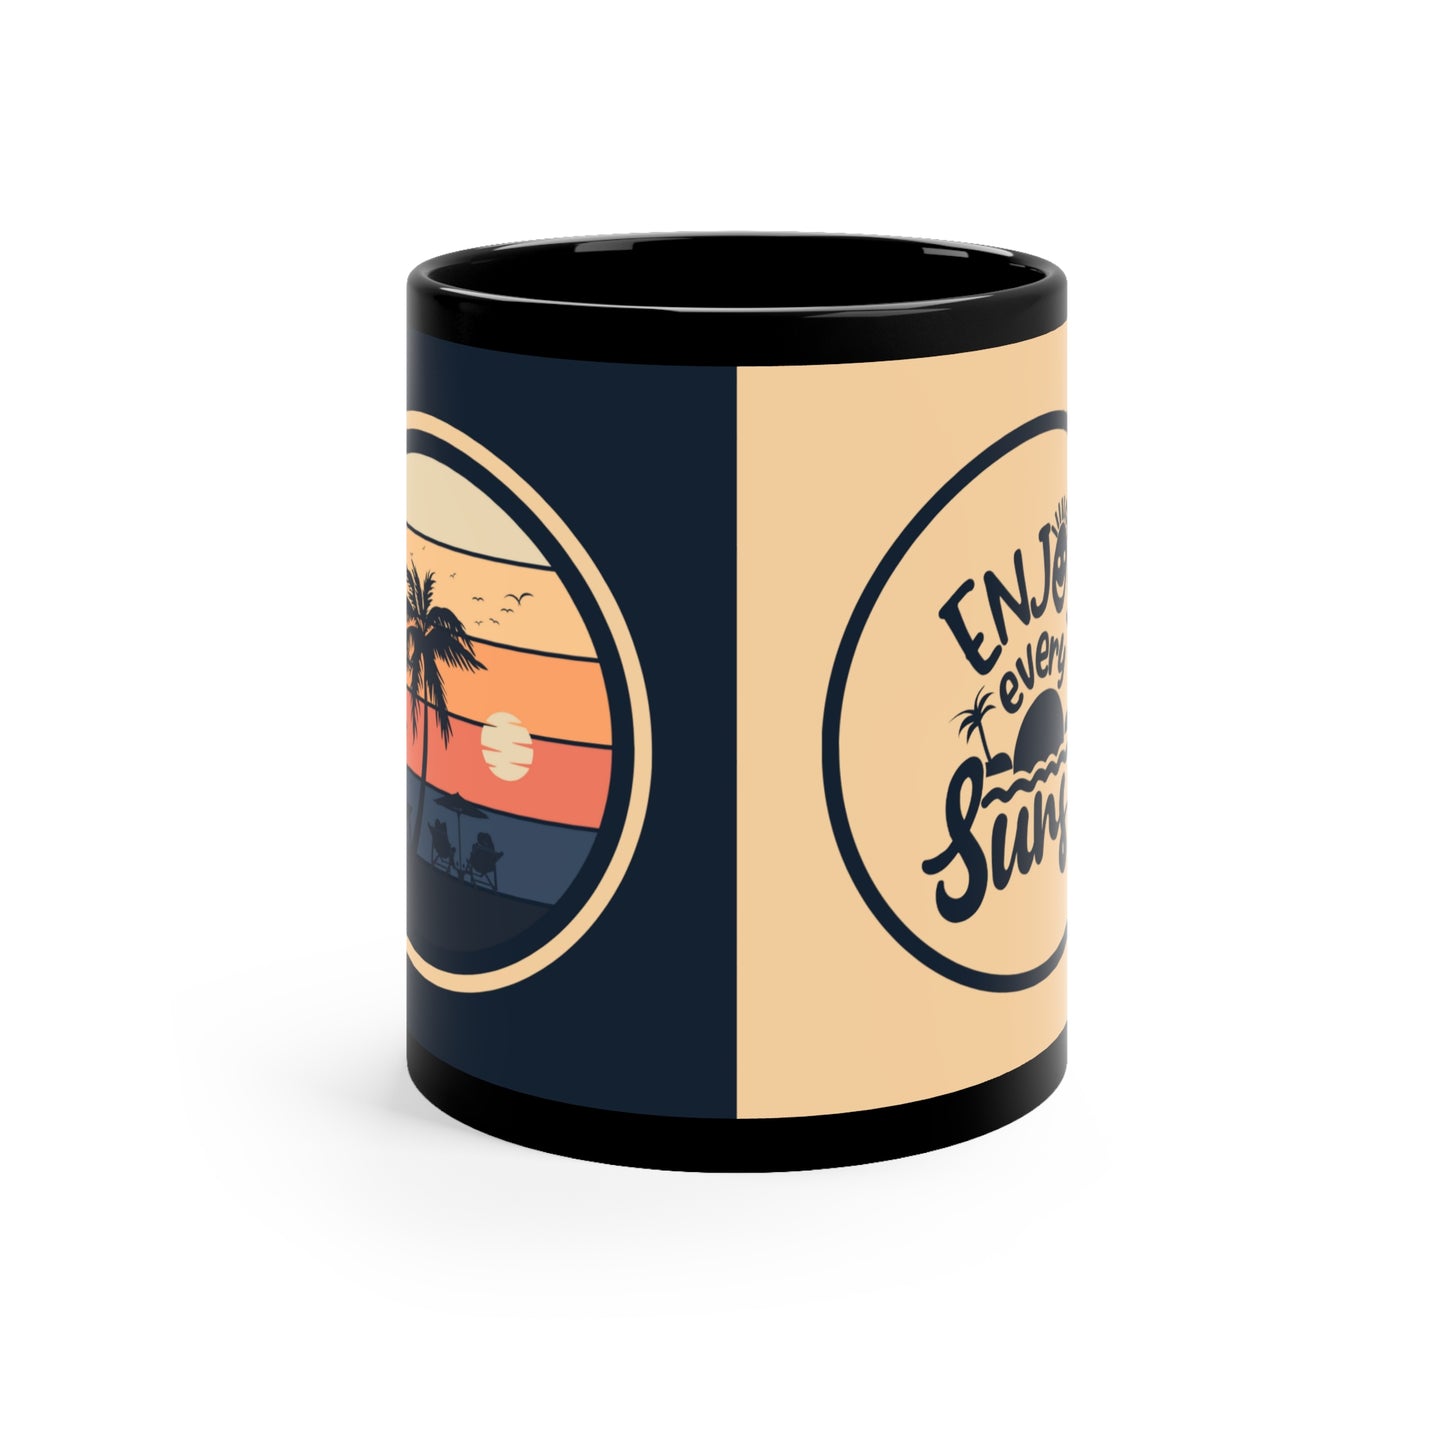 Coffee Mug, Enjoy Every Sunset 11oz Black Mug - Digital By M&B